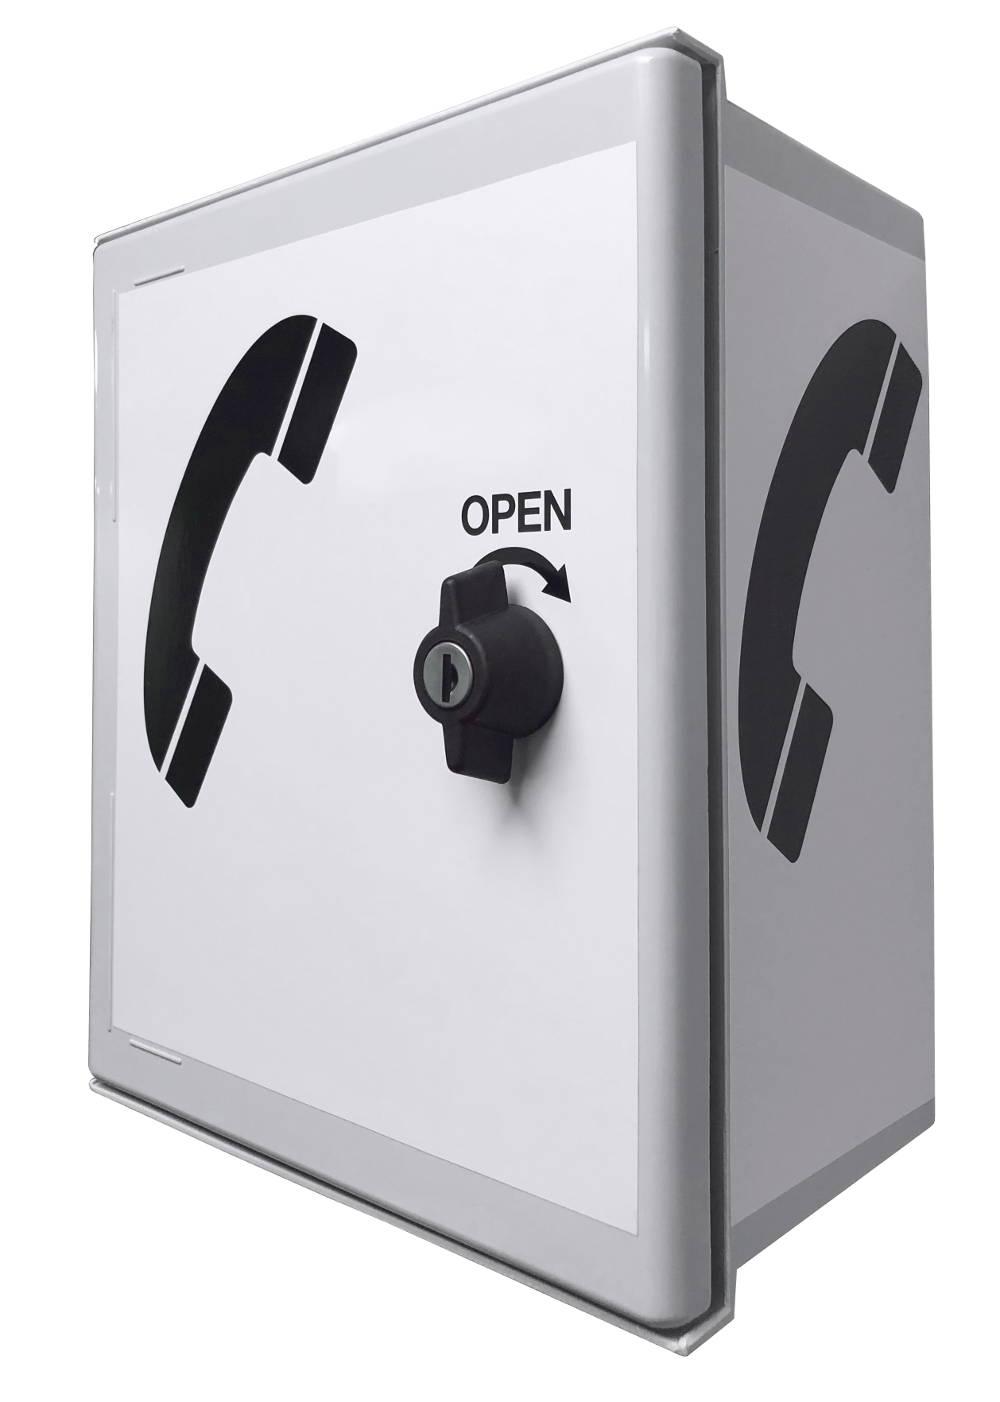 Small Telephone Logo - Small Telephone White Door with black handset